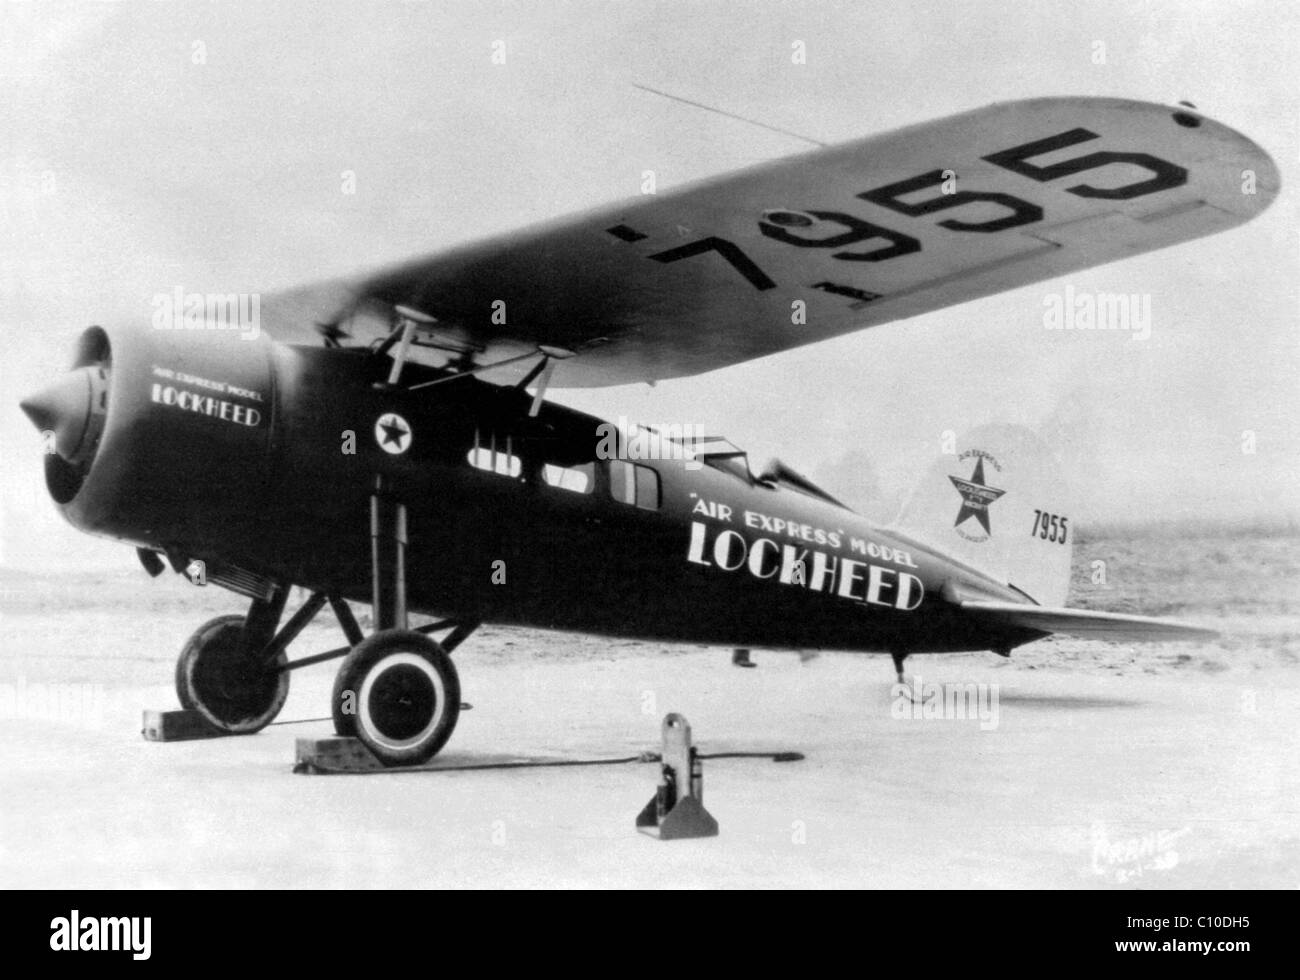 Lockheed Vega Air Express Stock Photo